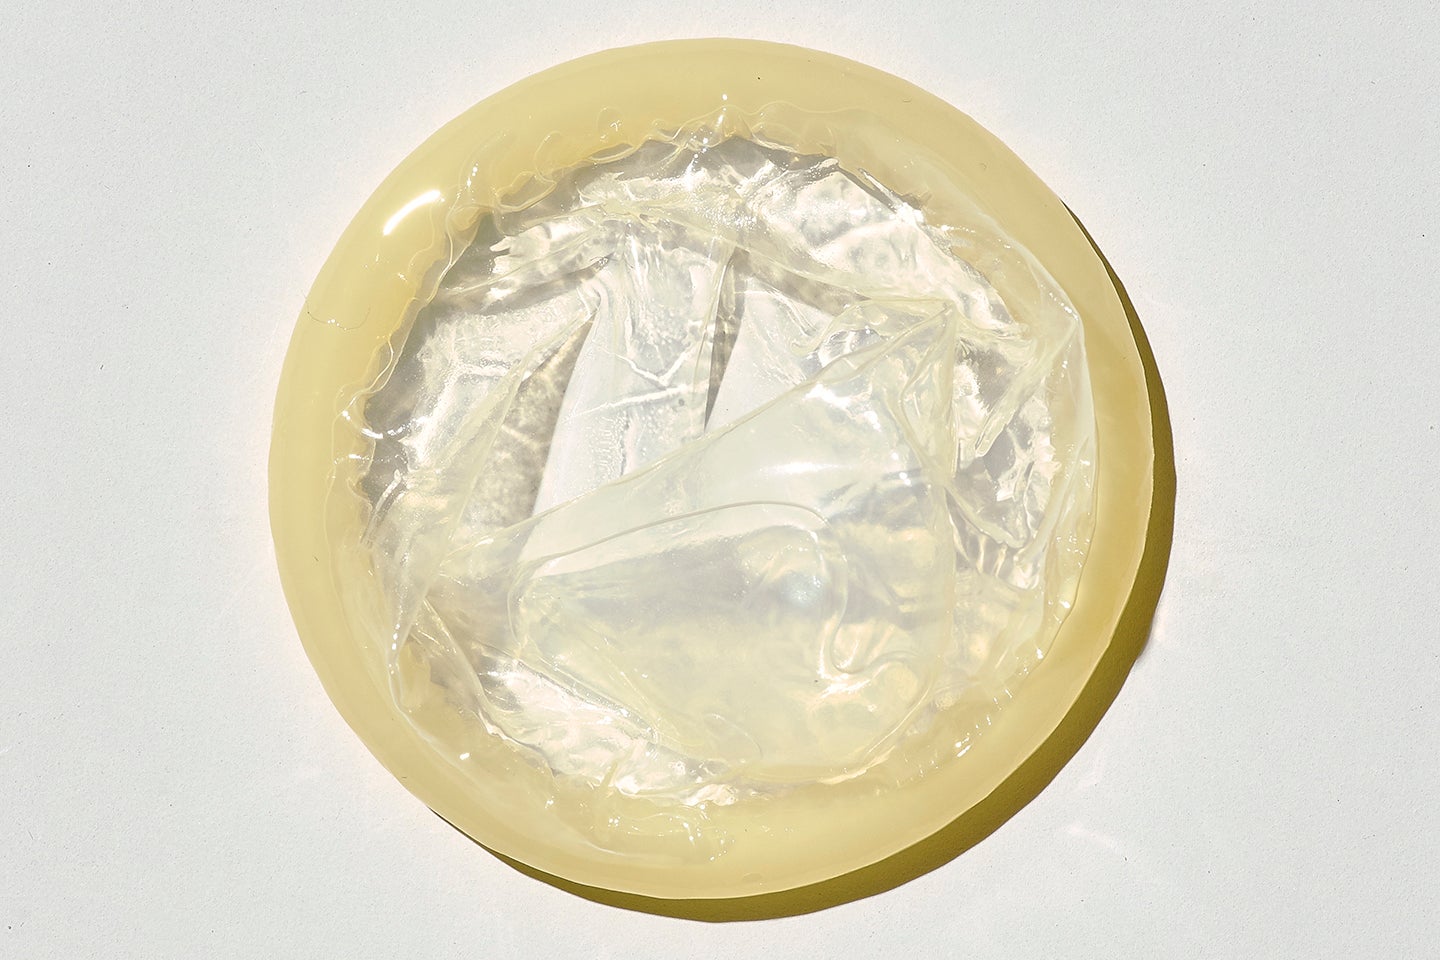 You change condoms after each ejaculation